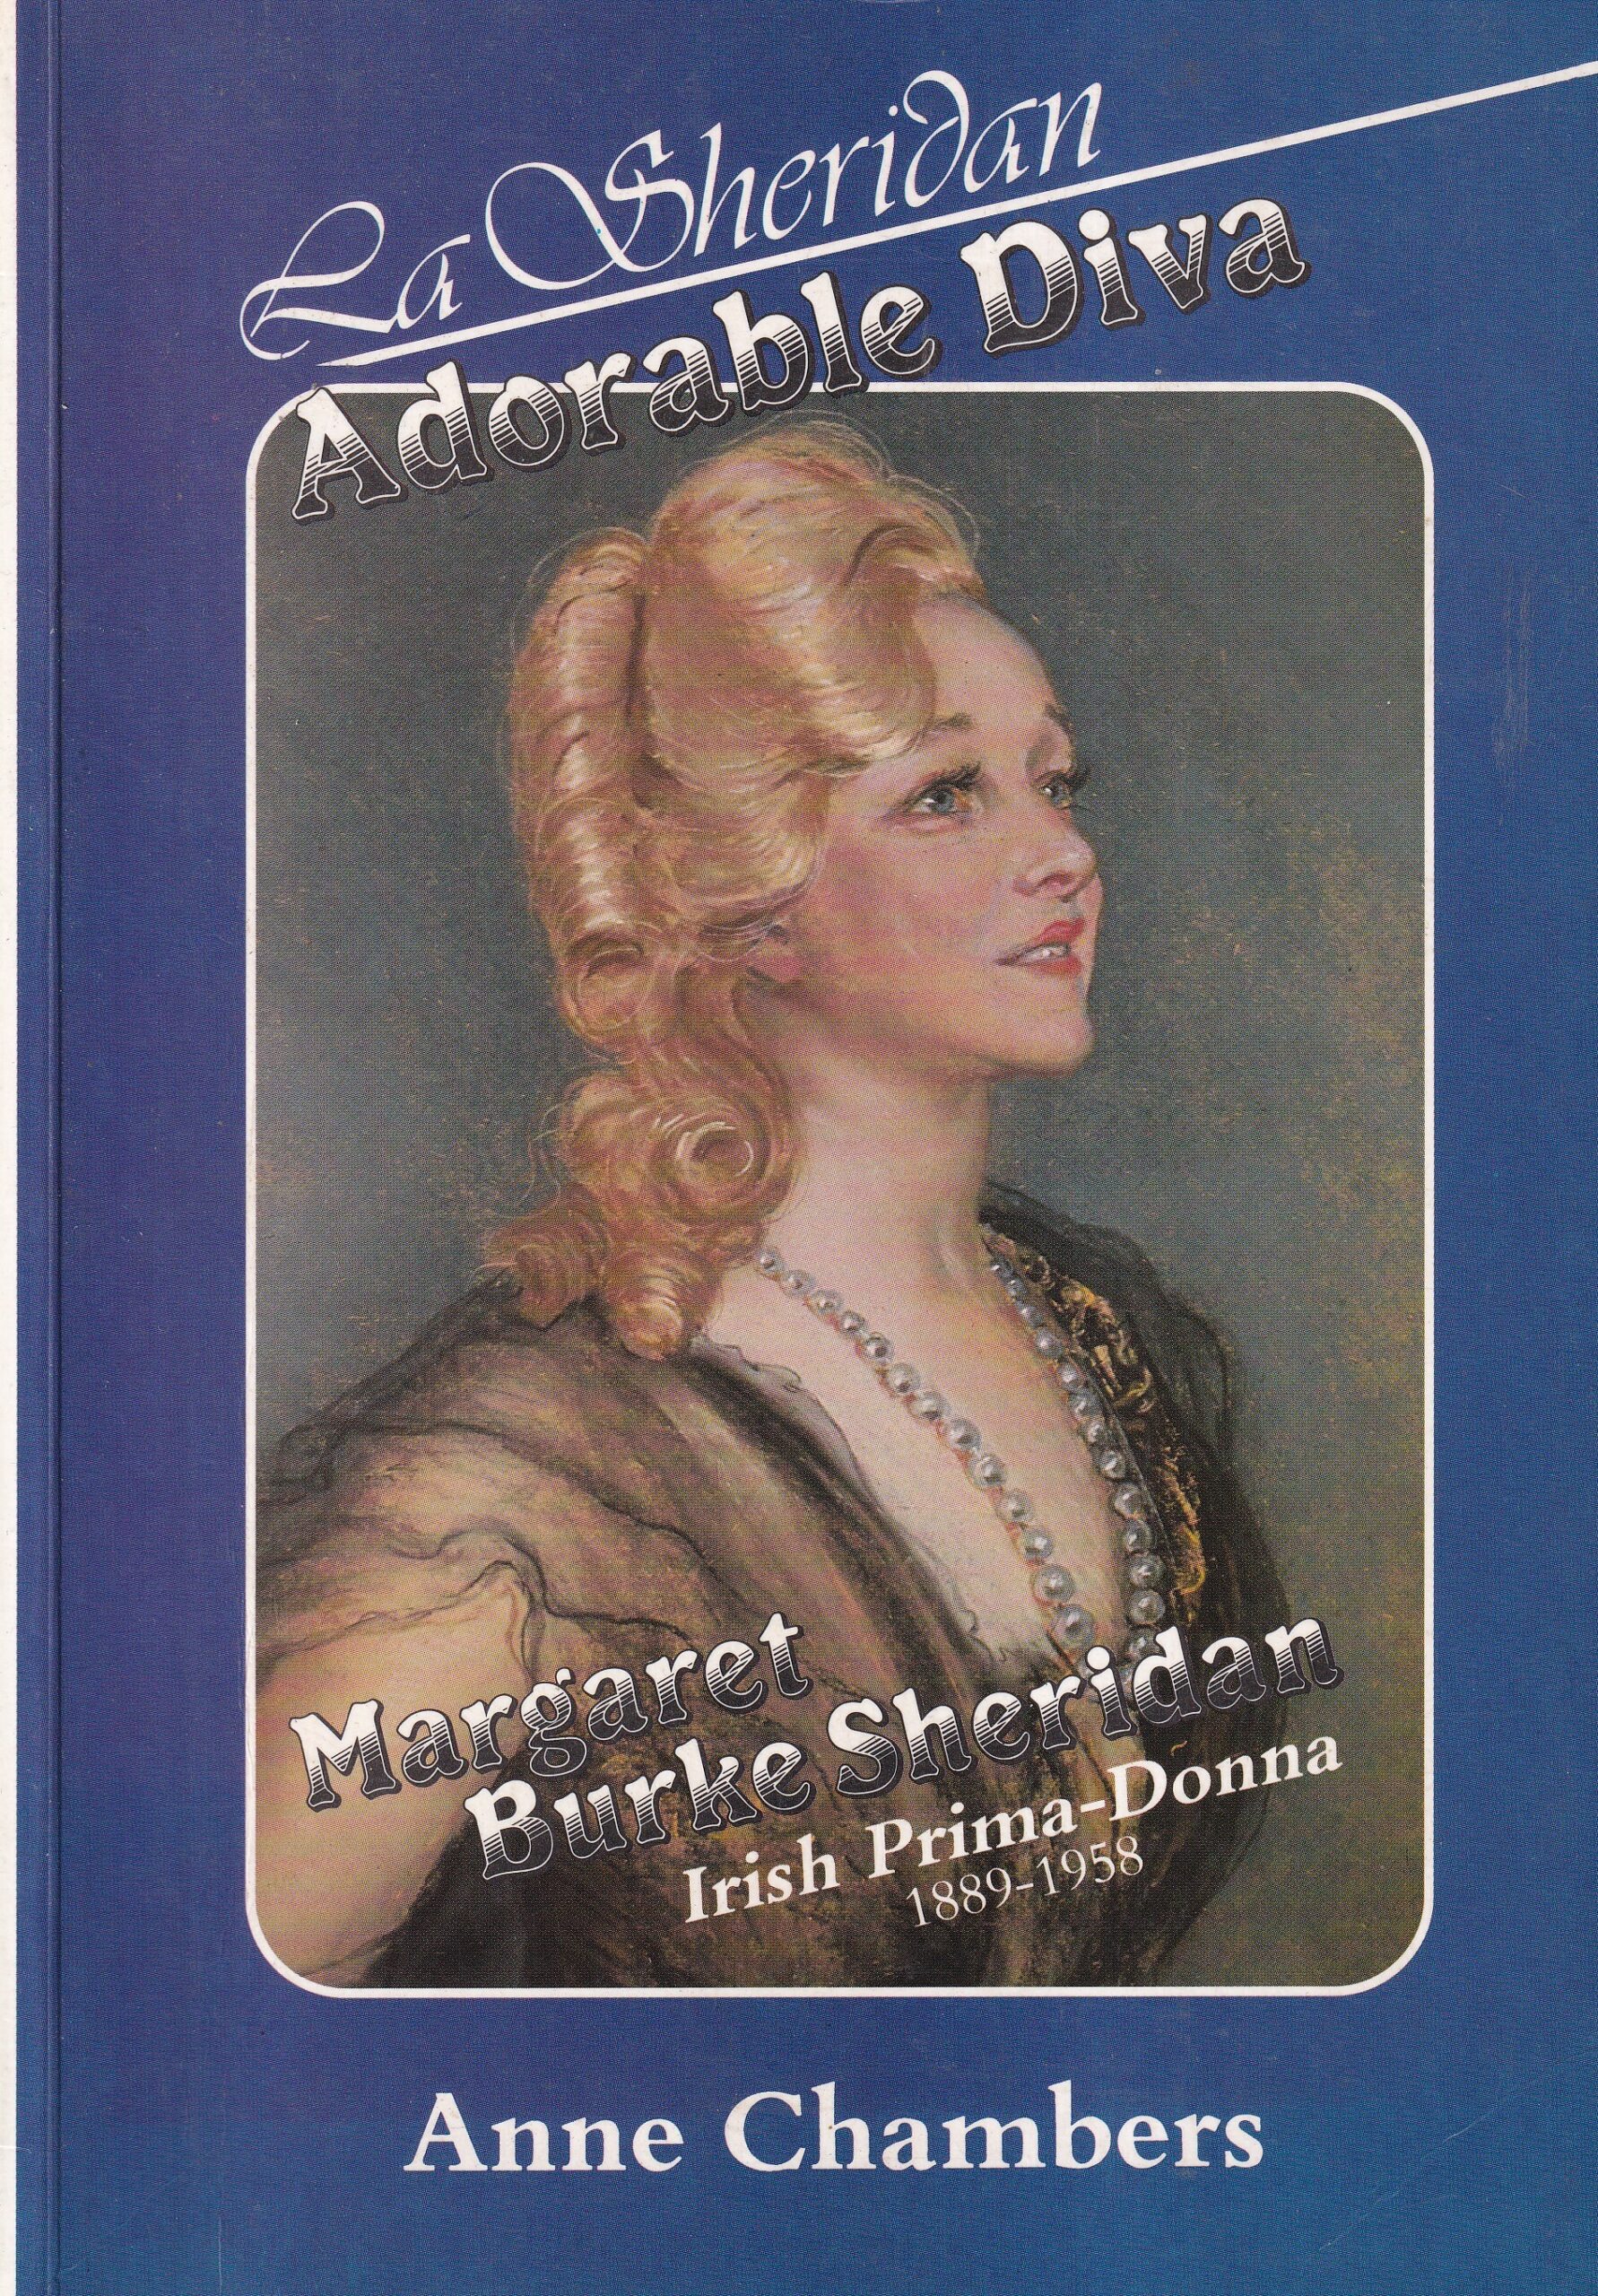 La Sheridan Adorable Diva: Margaret Burke Sheridan Irish Prima-Donna 1889-1958- Signed | Anne Chambers | Charlie Byrne's